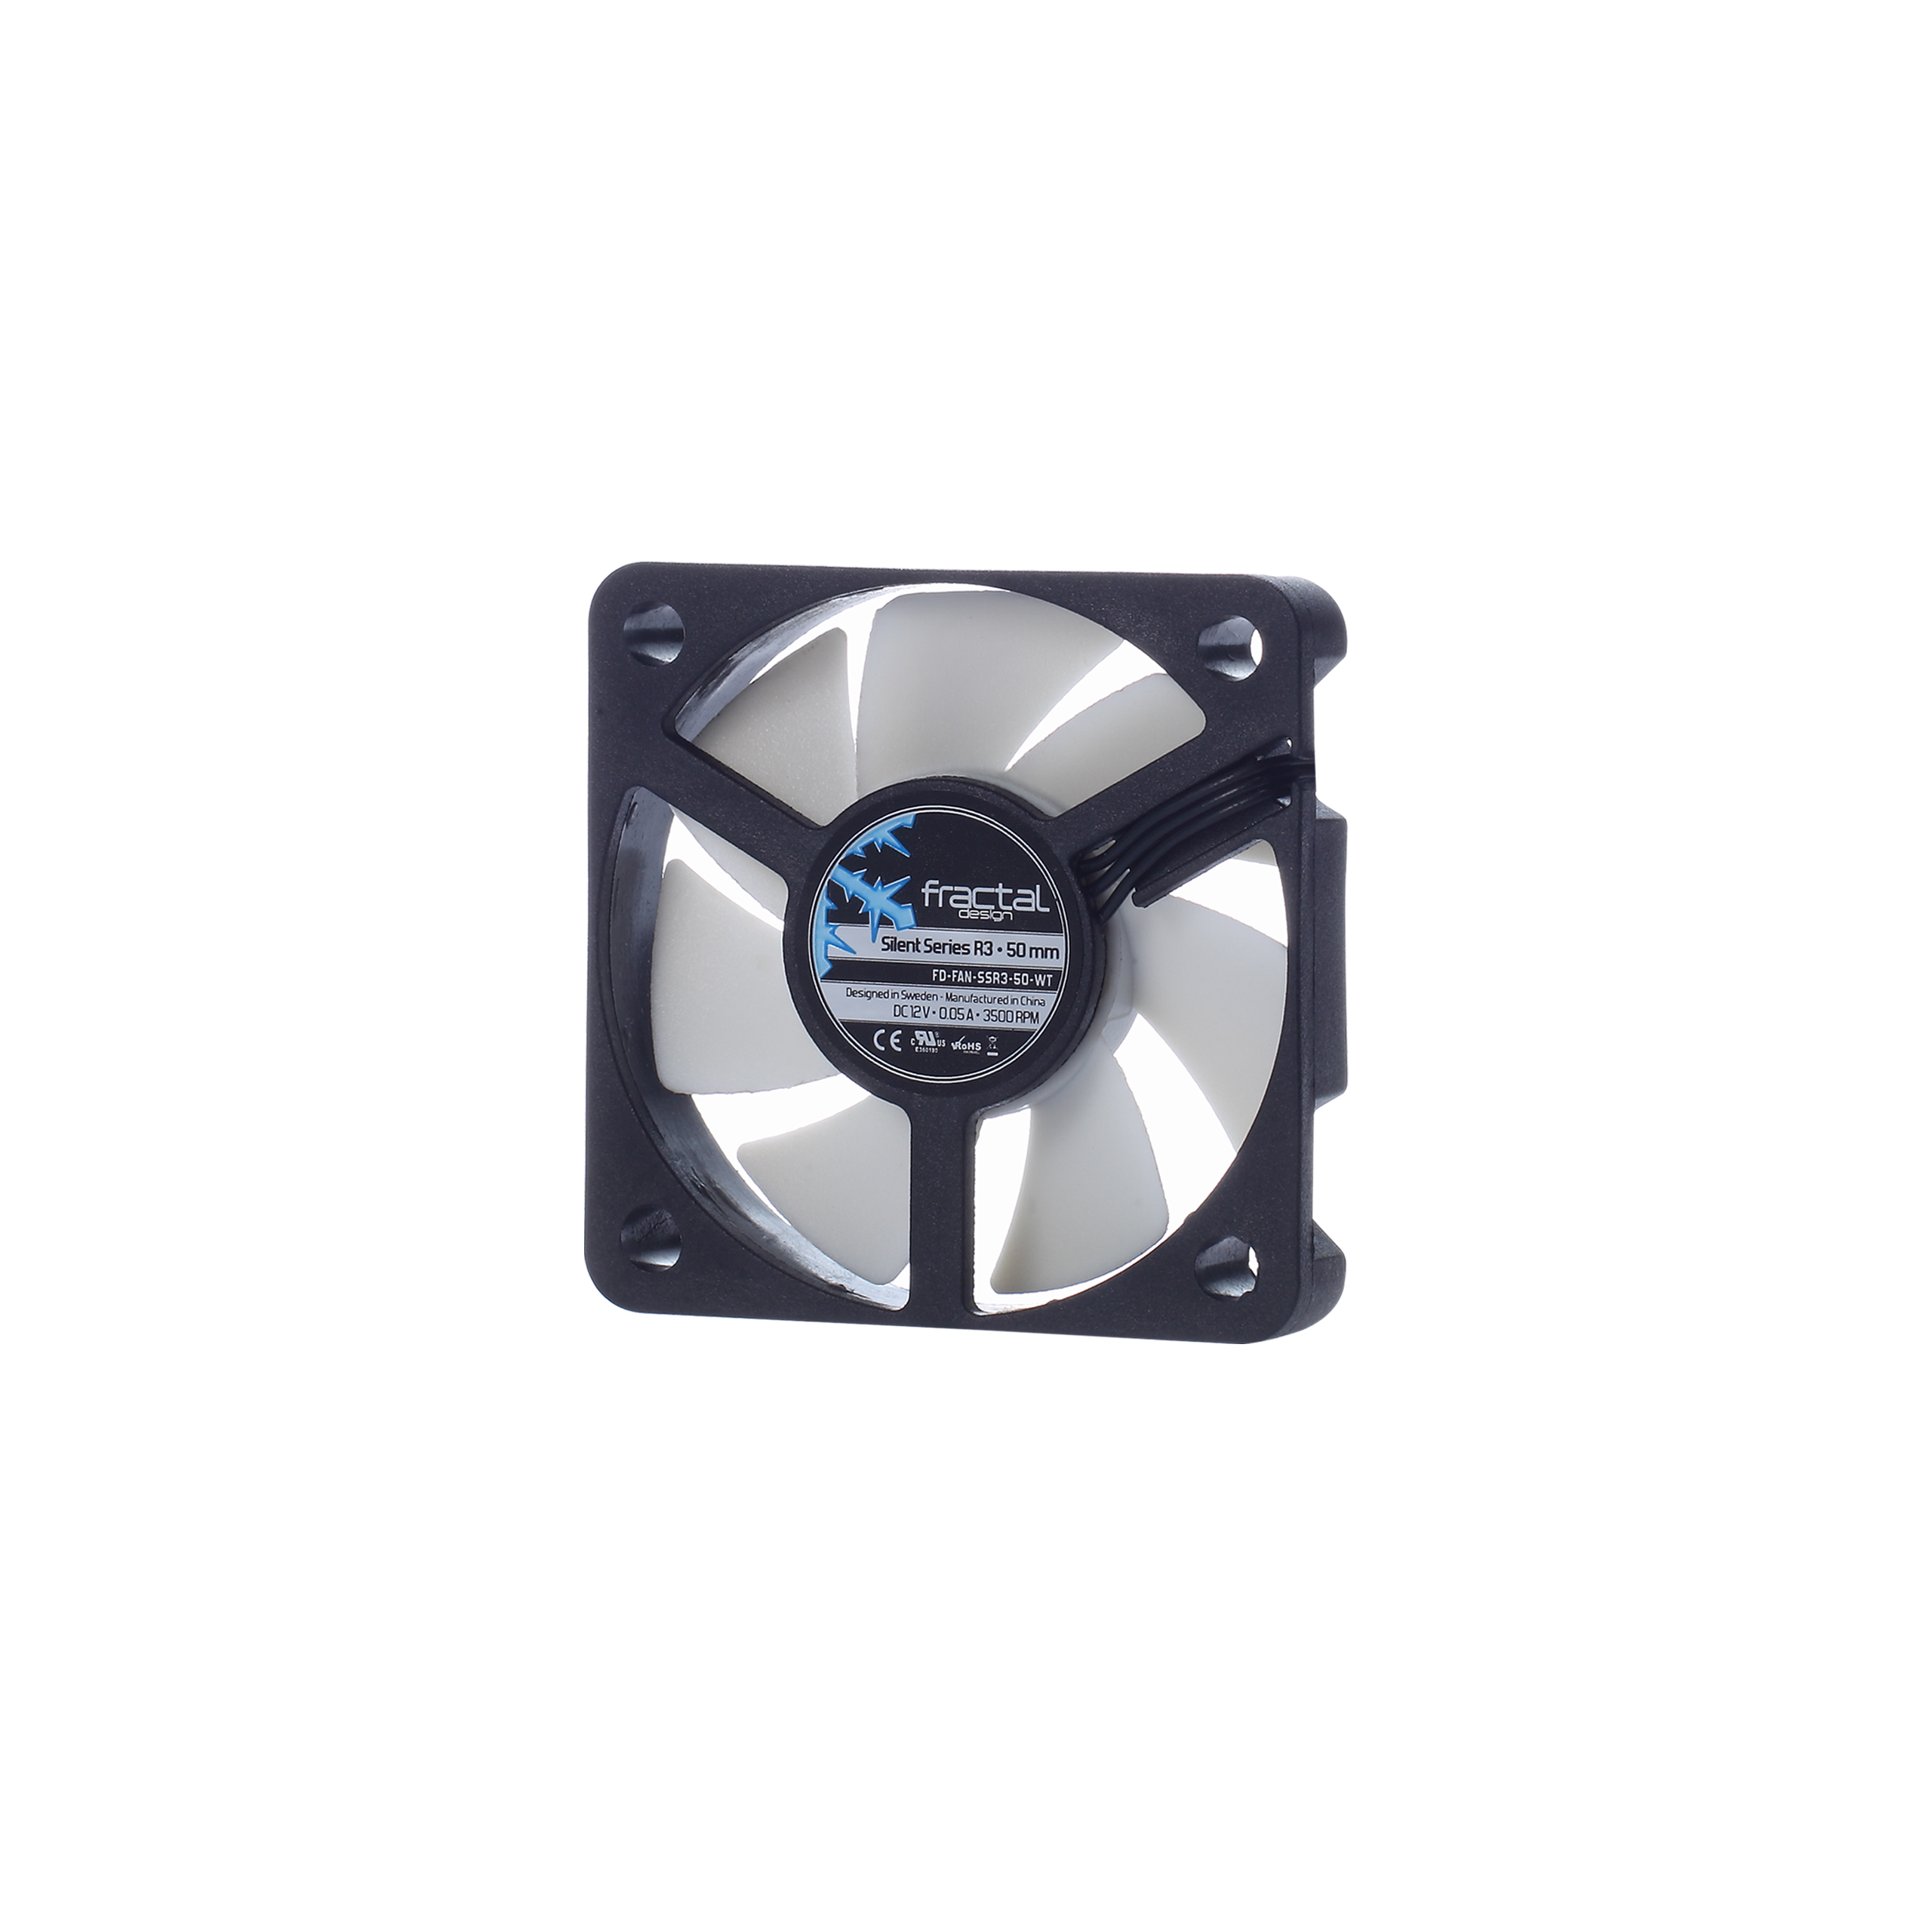 Вентилятор Fractal Design Silent Series R3 50mm, 50мм, 3500rpm, 19 дБ, 3-pin, 1шт, отсутствует (FD_FANSSR350WT) - фото 1